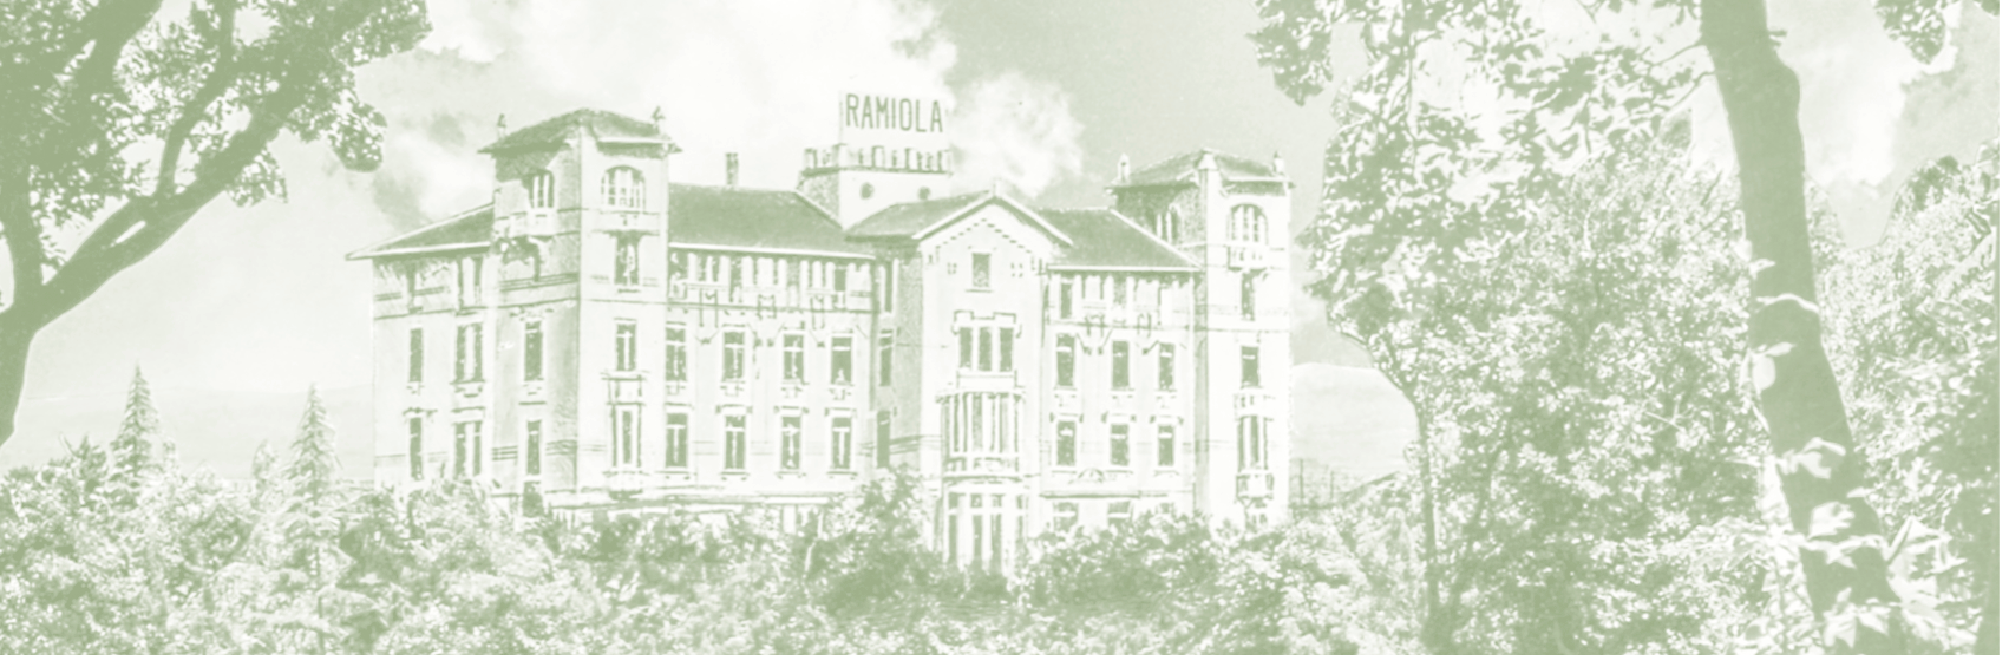 banner villa ramiola